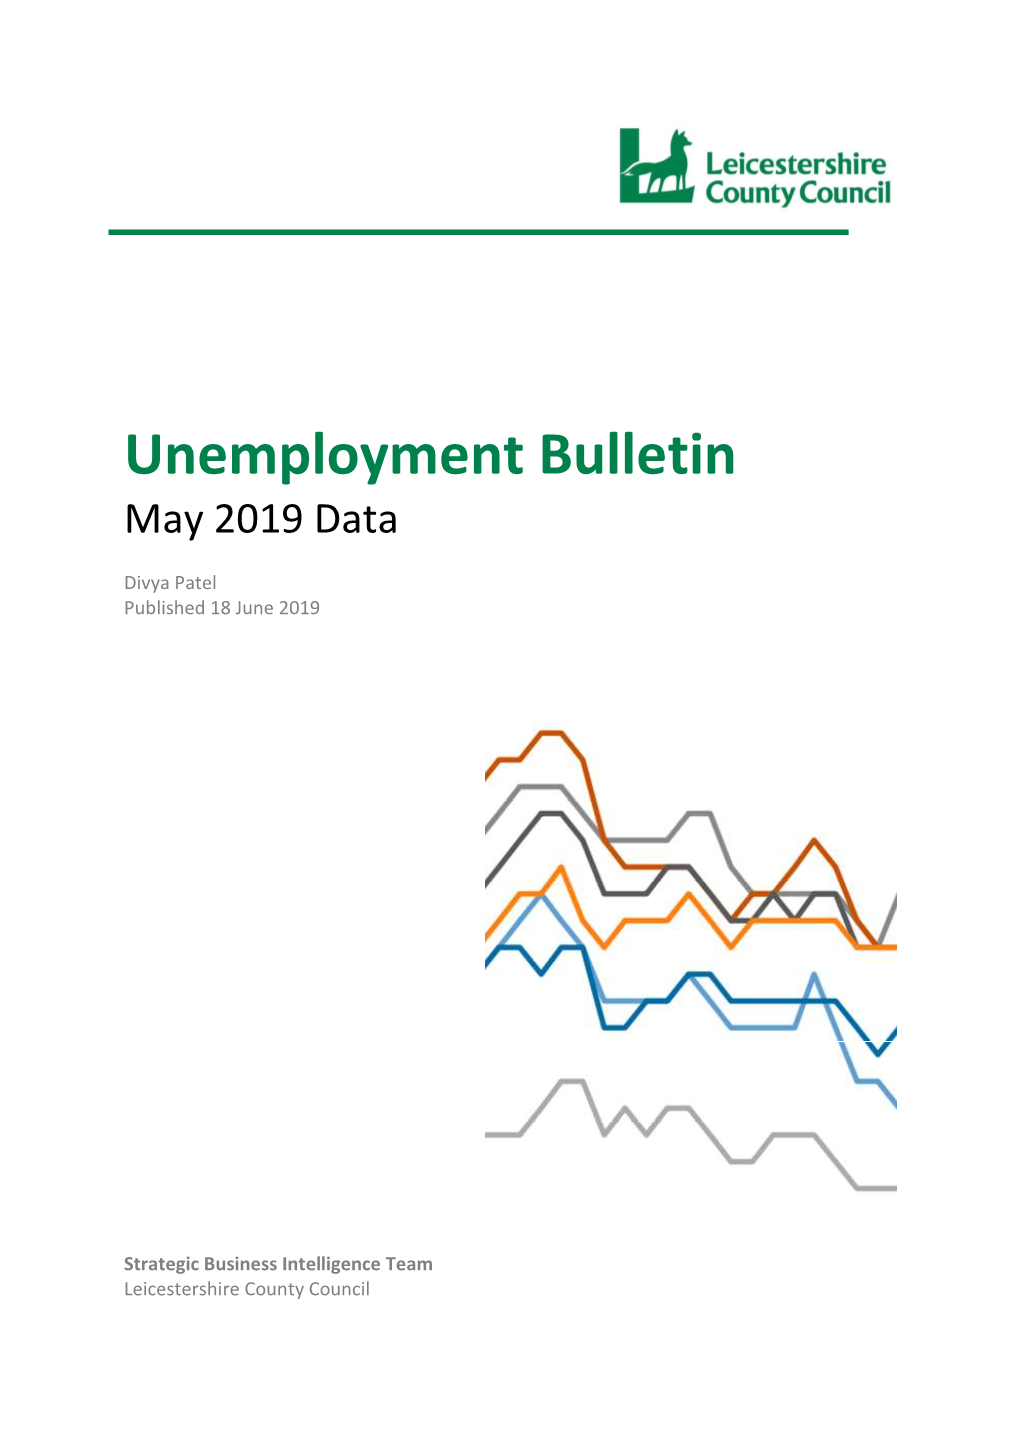 Unemployment Bulletin May 2019 Data